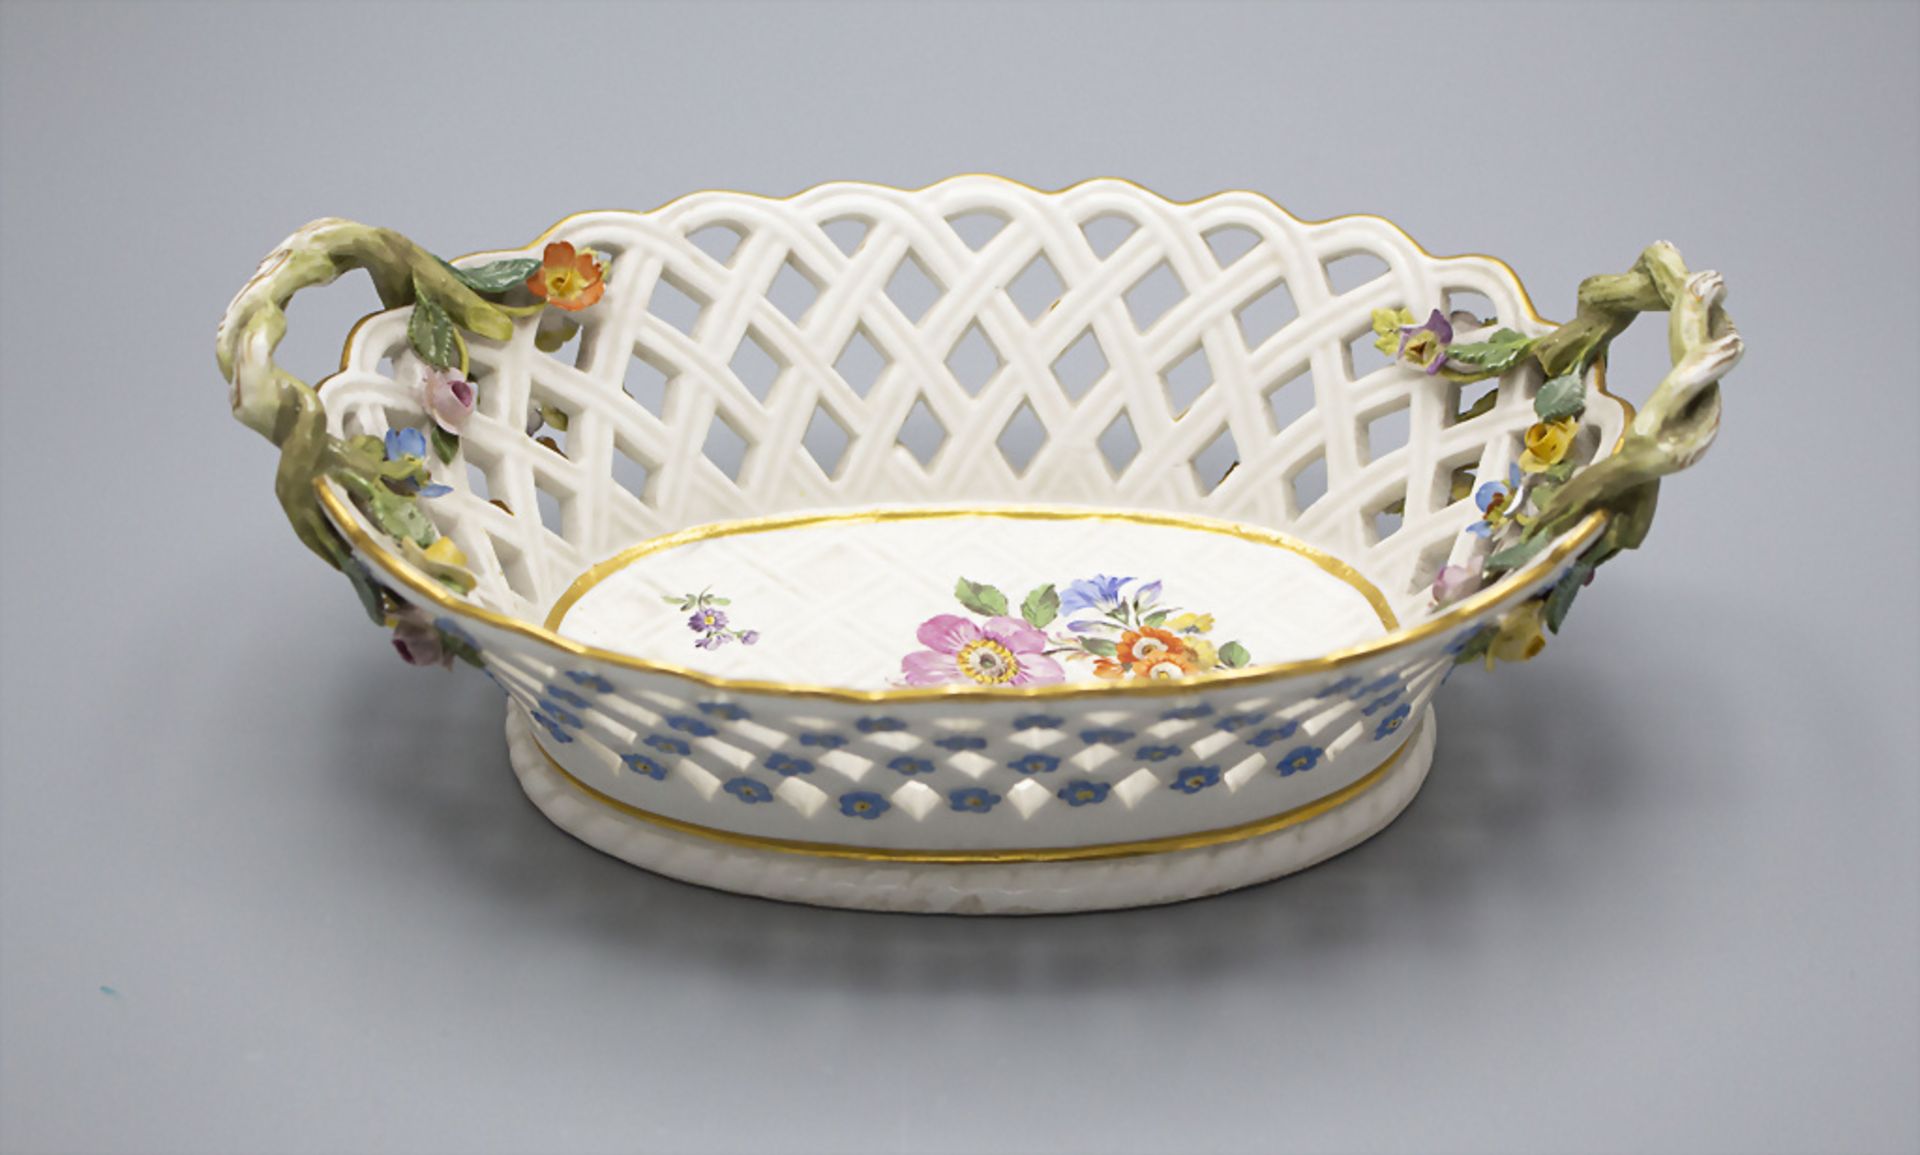 Zierschale mit aufgelegten Blüten / A decorative bowl with encrusted forget-me-not blossoms ...